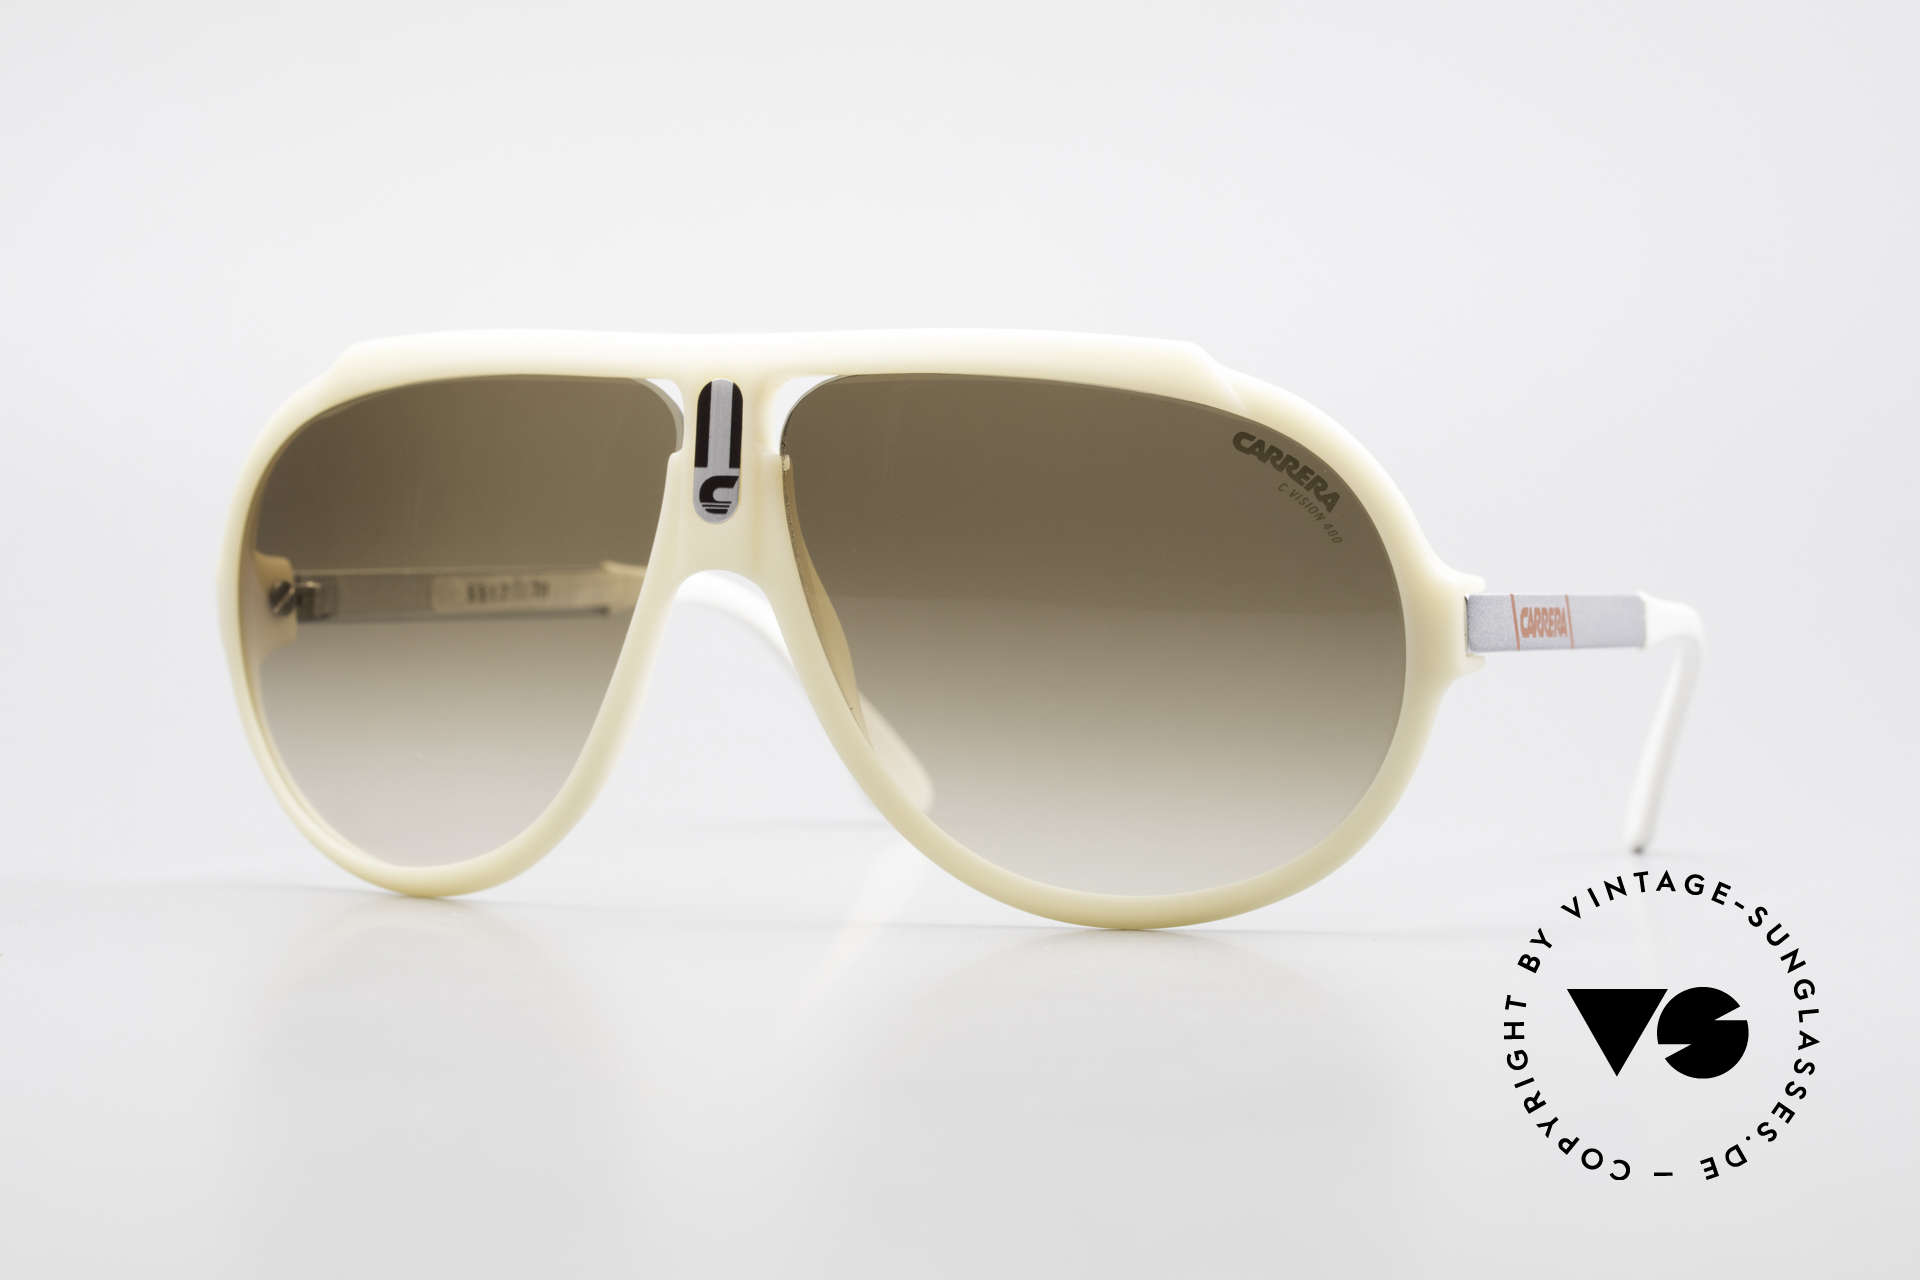 Sunglasses Carrera 5512 Don Johnson Miami Vice Shades | Vintage Sunglasses